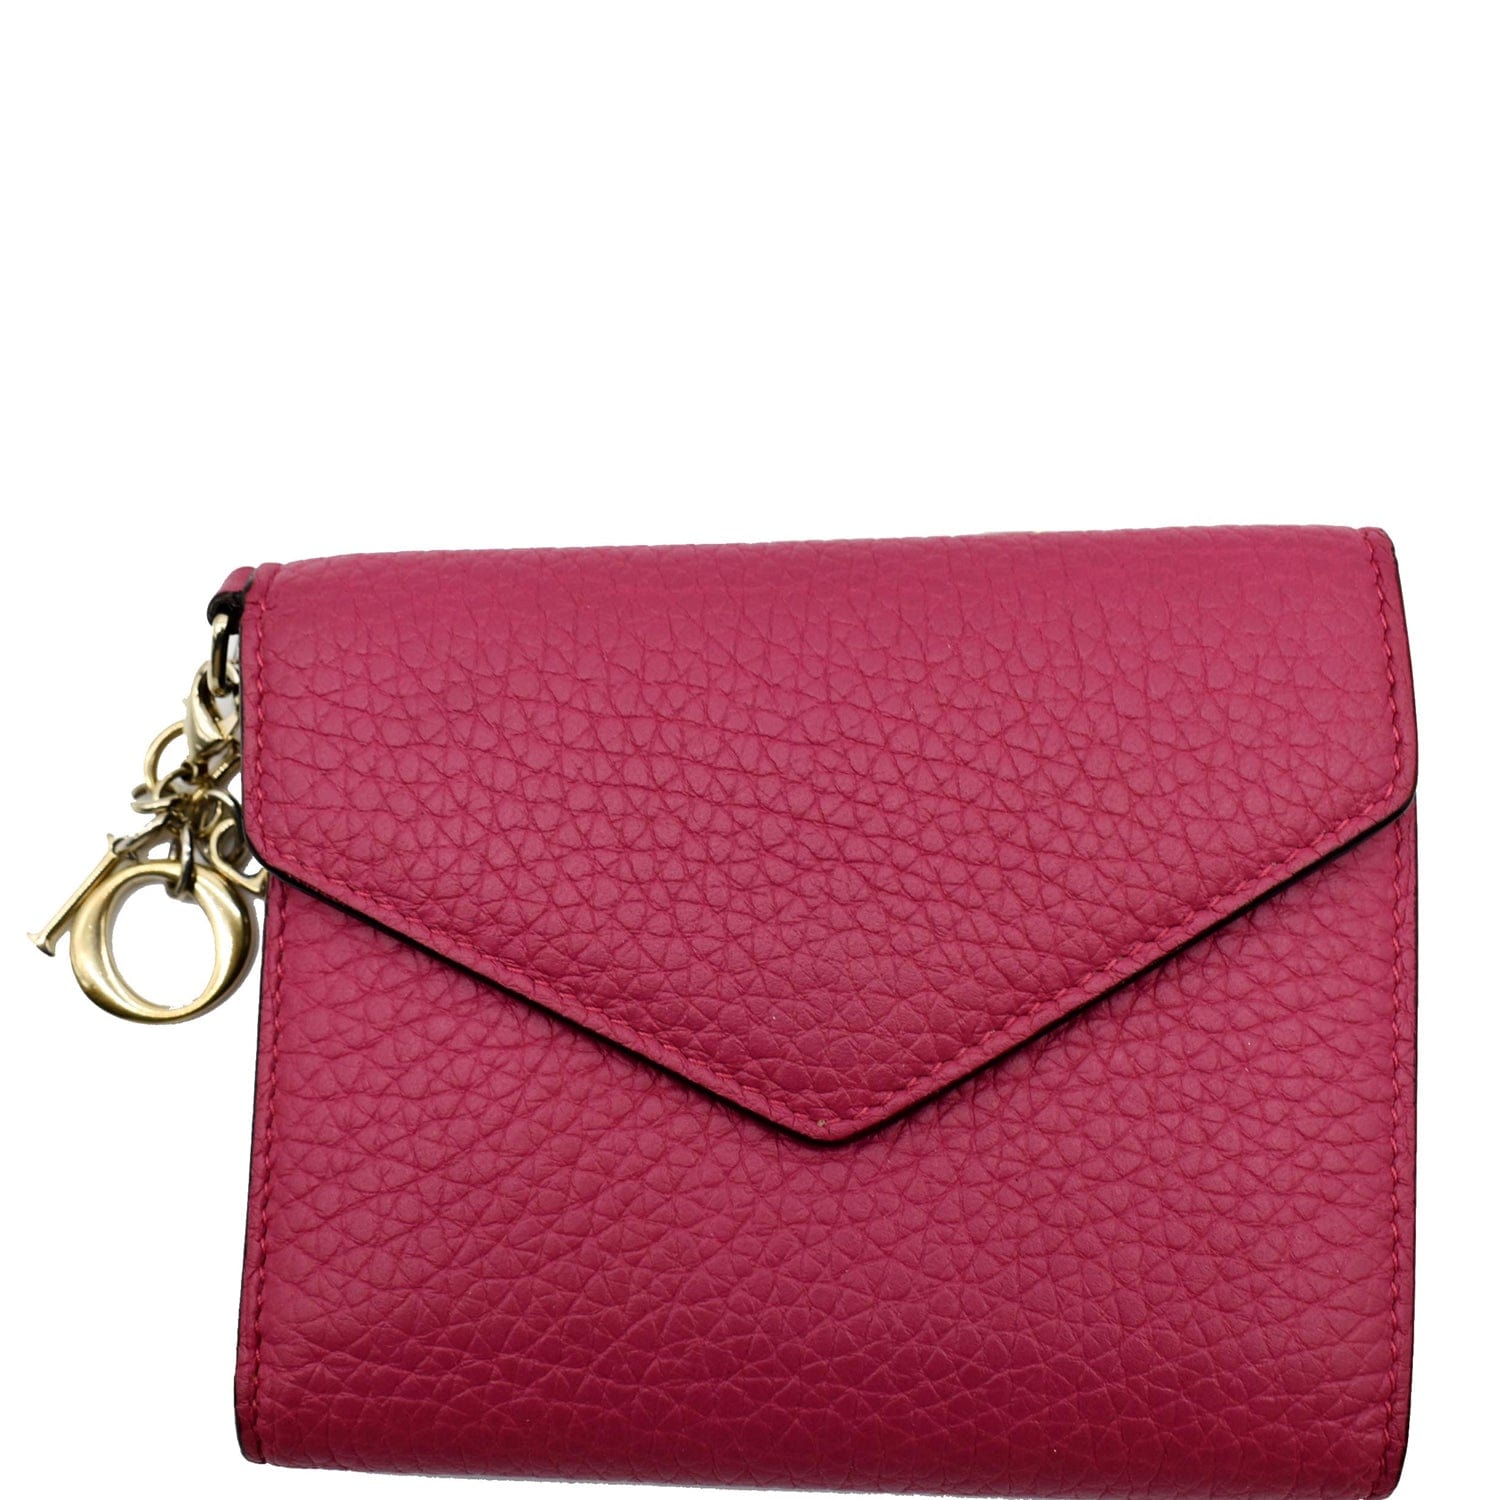 Christian Dior Dior DIOR Diorissimo round wallet pink